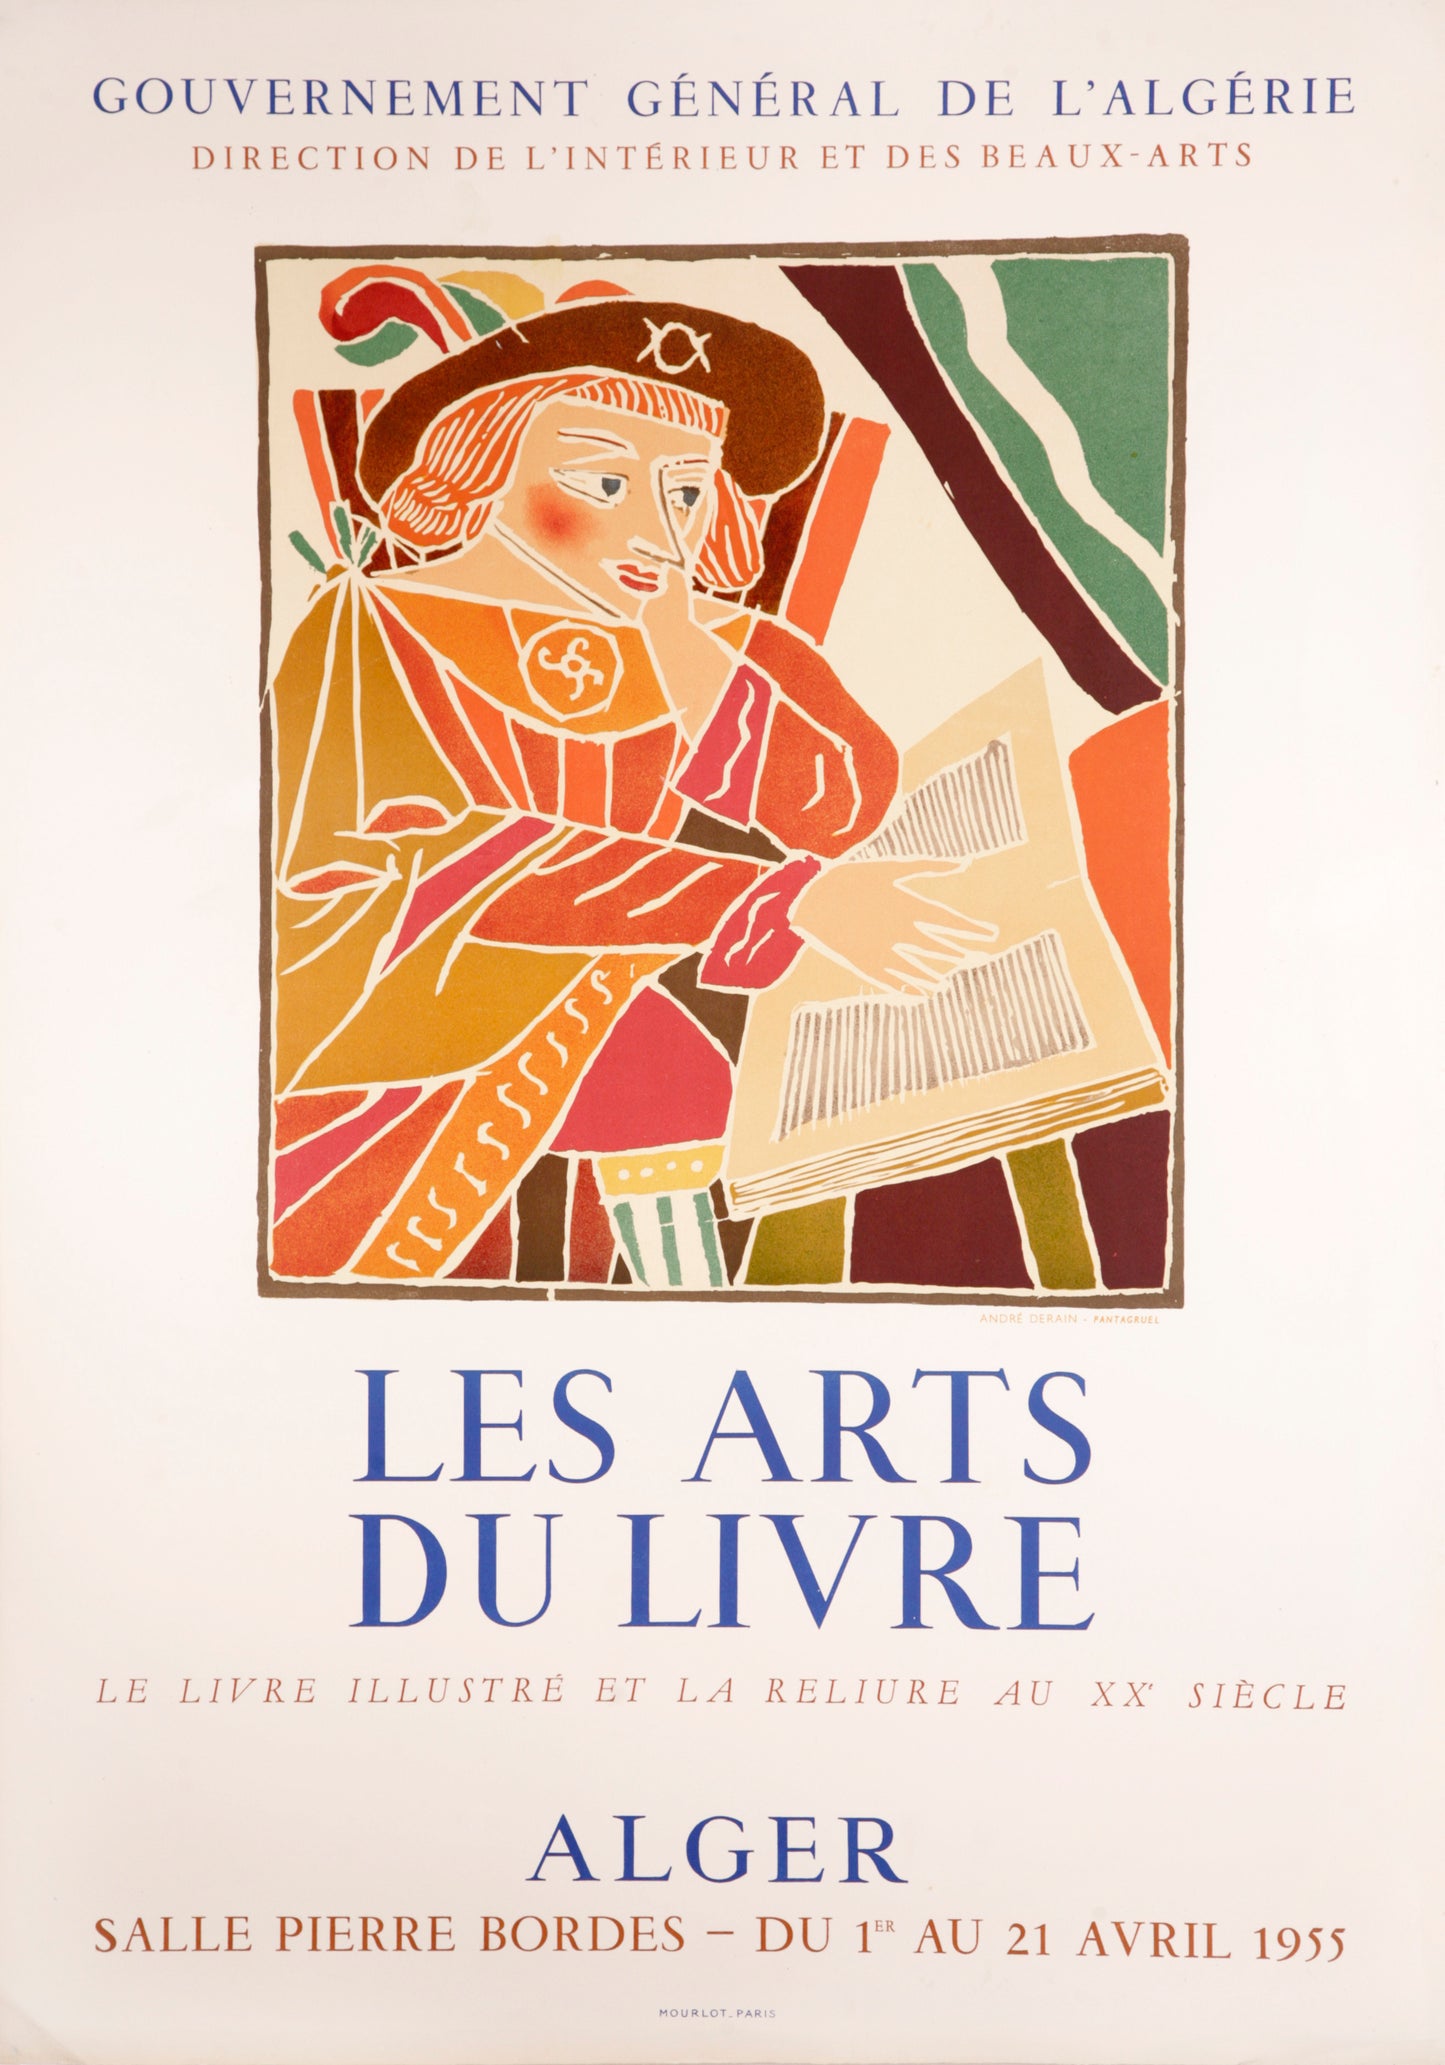 Bibliothèque Nationale by Andre Derain - Mourlot Editions - Fine_Art - Poster - Lithograph - Wall Art - Vintage - Prints - Original